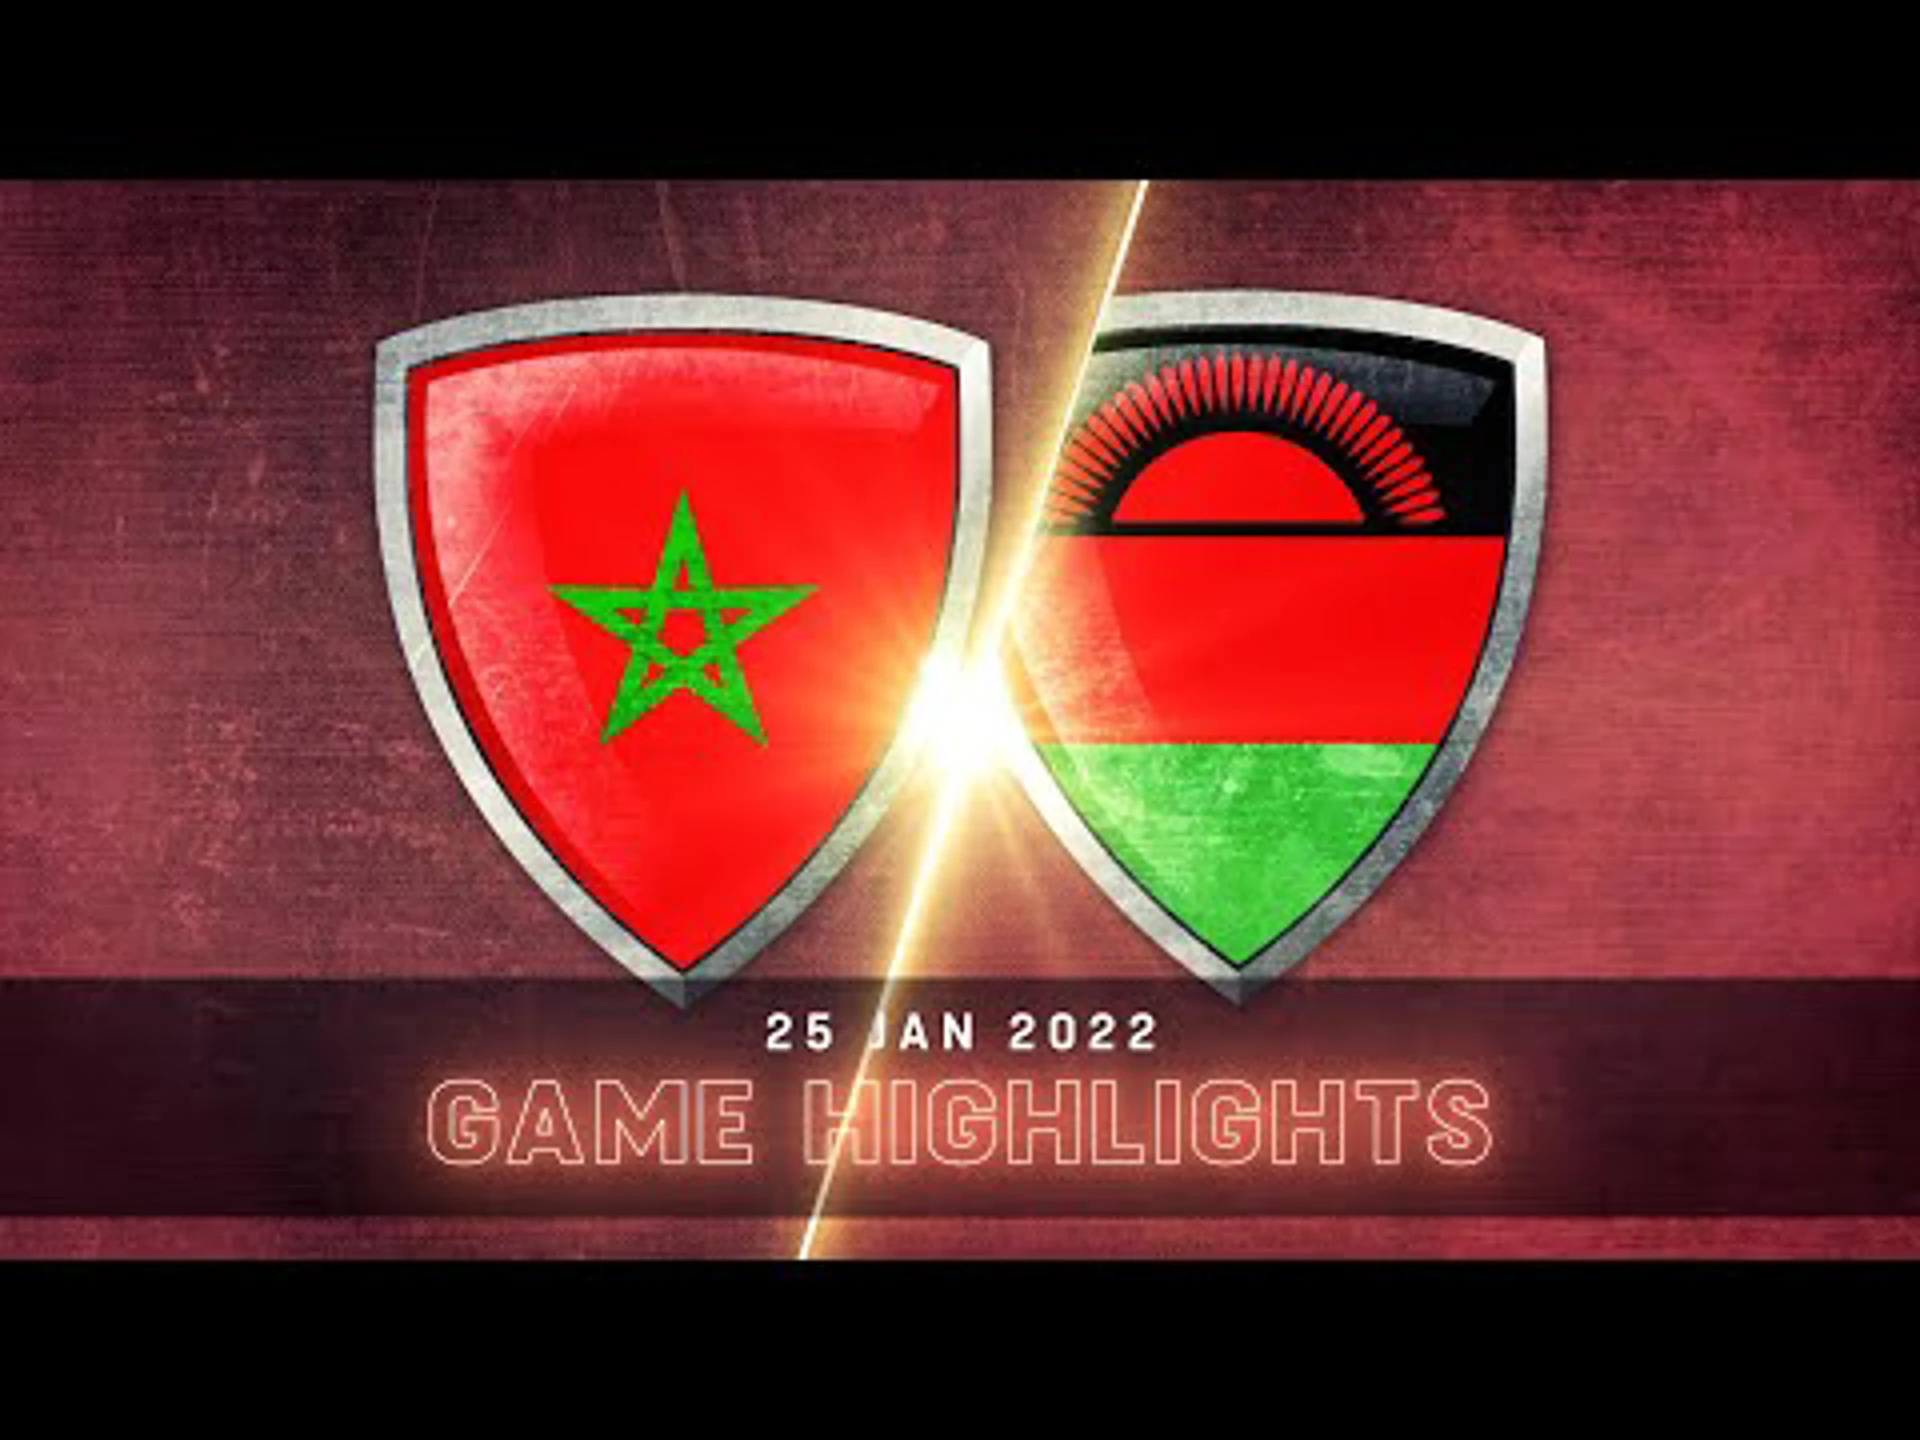 AFCON 2021 | Round of 16 | Morocco v Malawi | Highlights